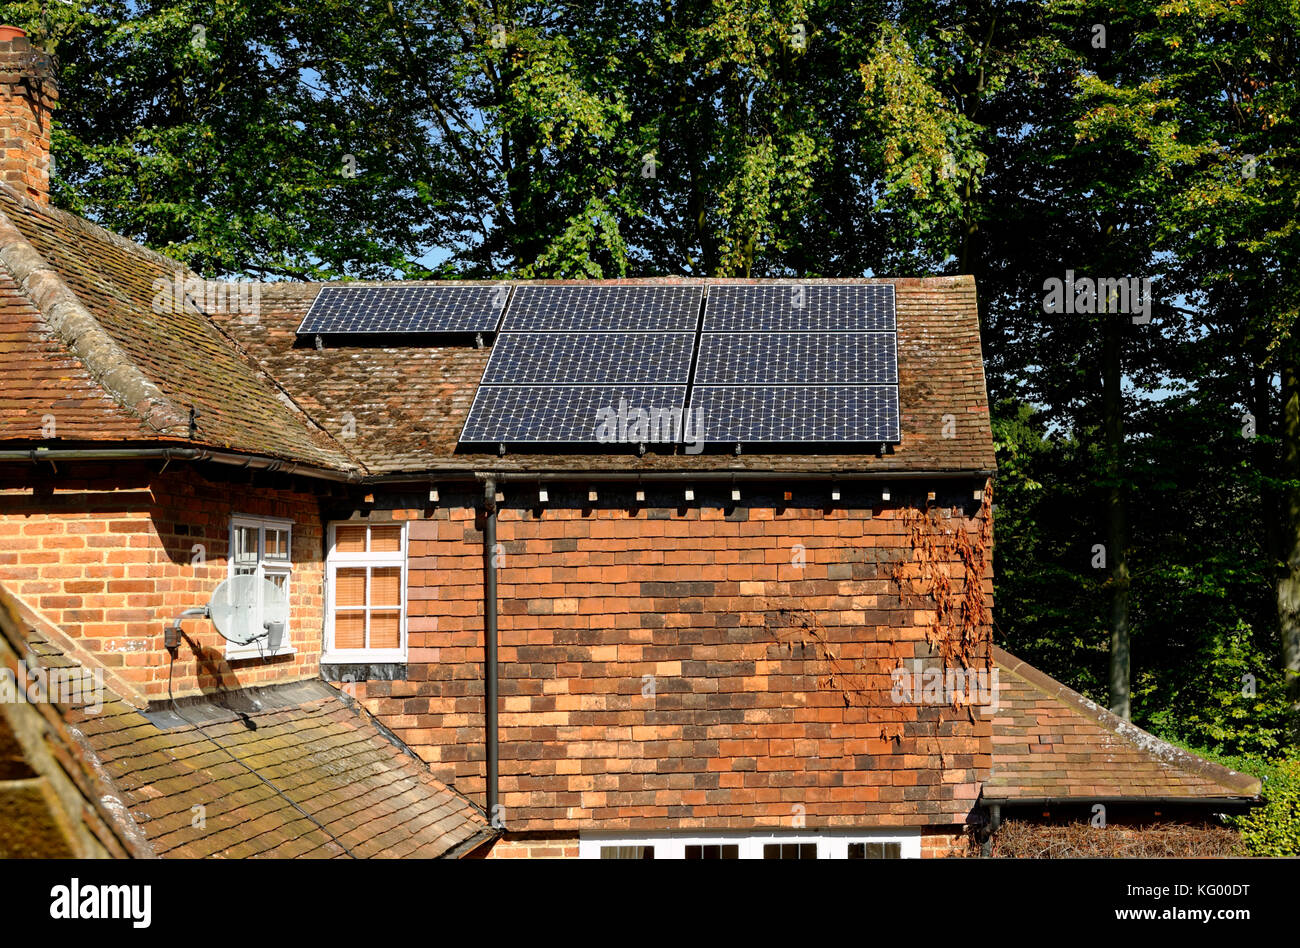 SOLAR POWER INSTALLATION DETACHED HOUSE ENGLAND UK Stock Photo